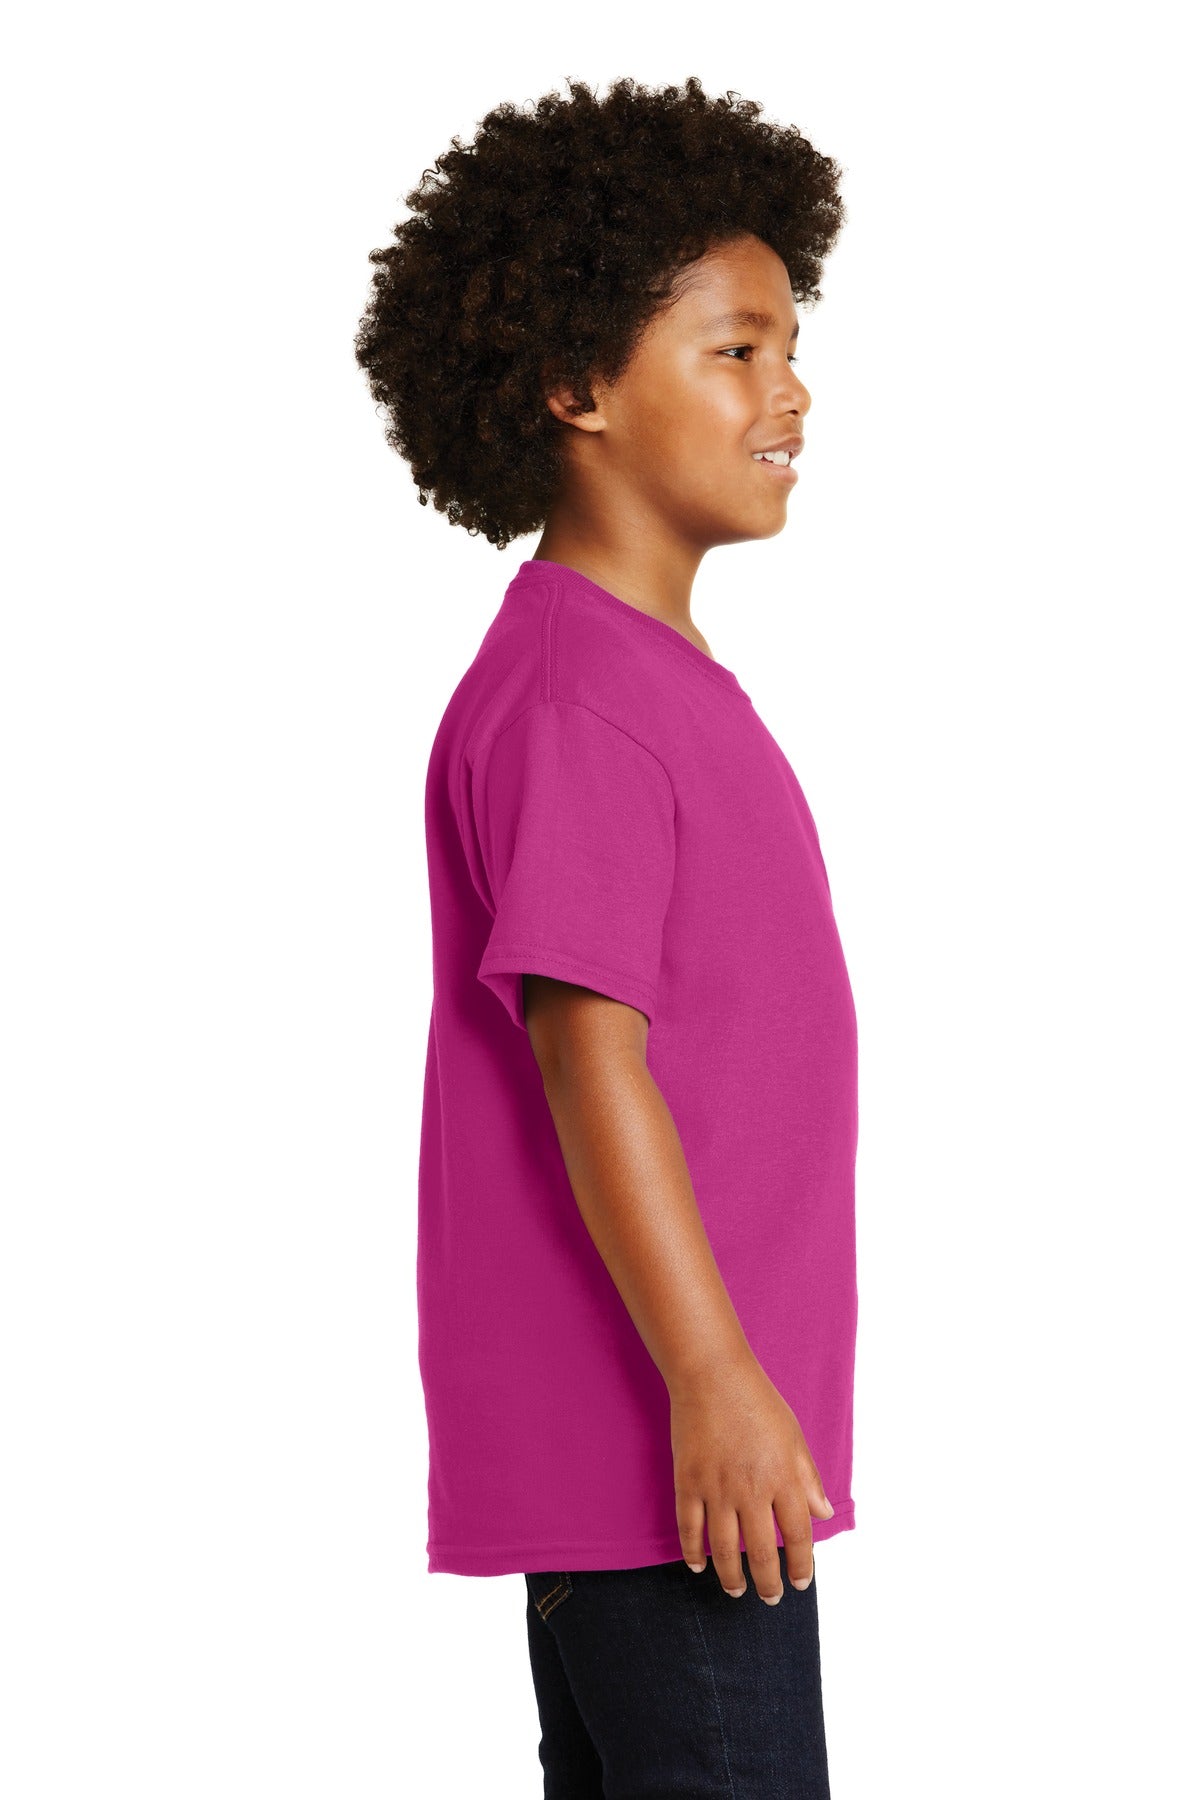 Gildan® - Youth Ultra Cotton®100% US Cotton T-Shirt. 2000B [Heliconia] - DFW Impression